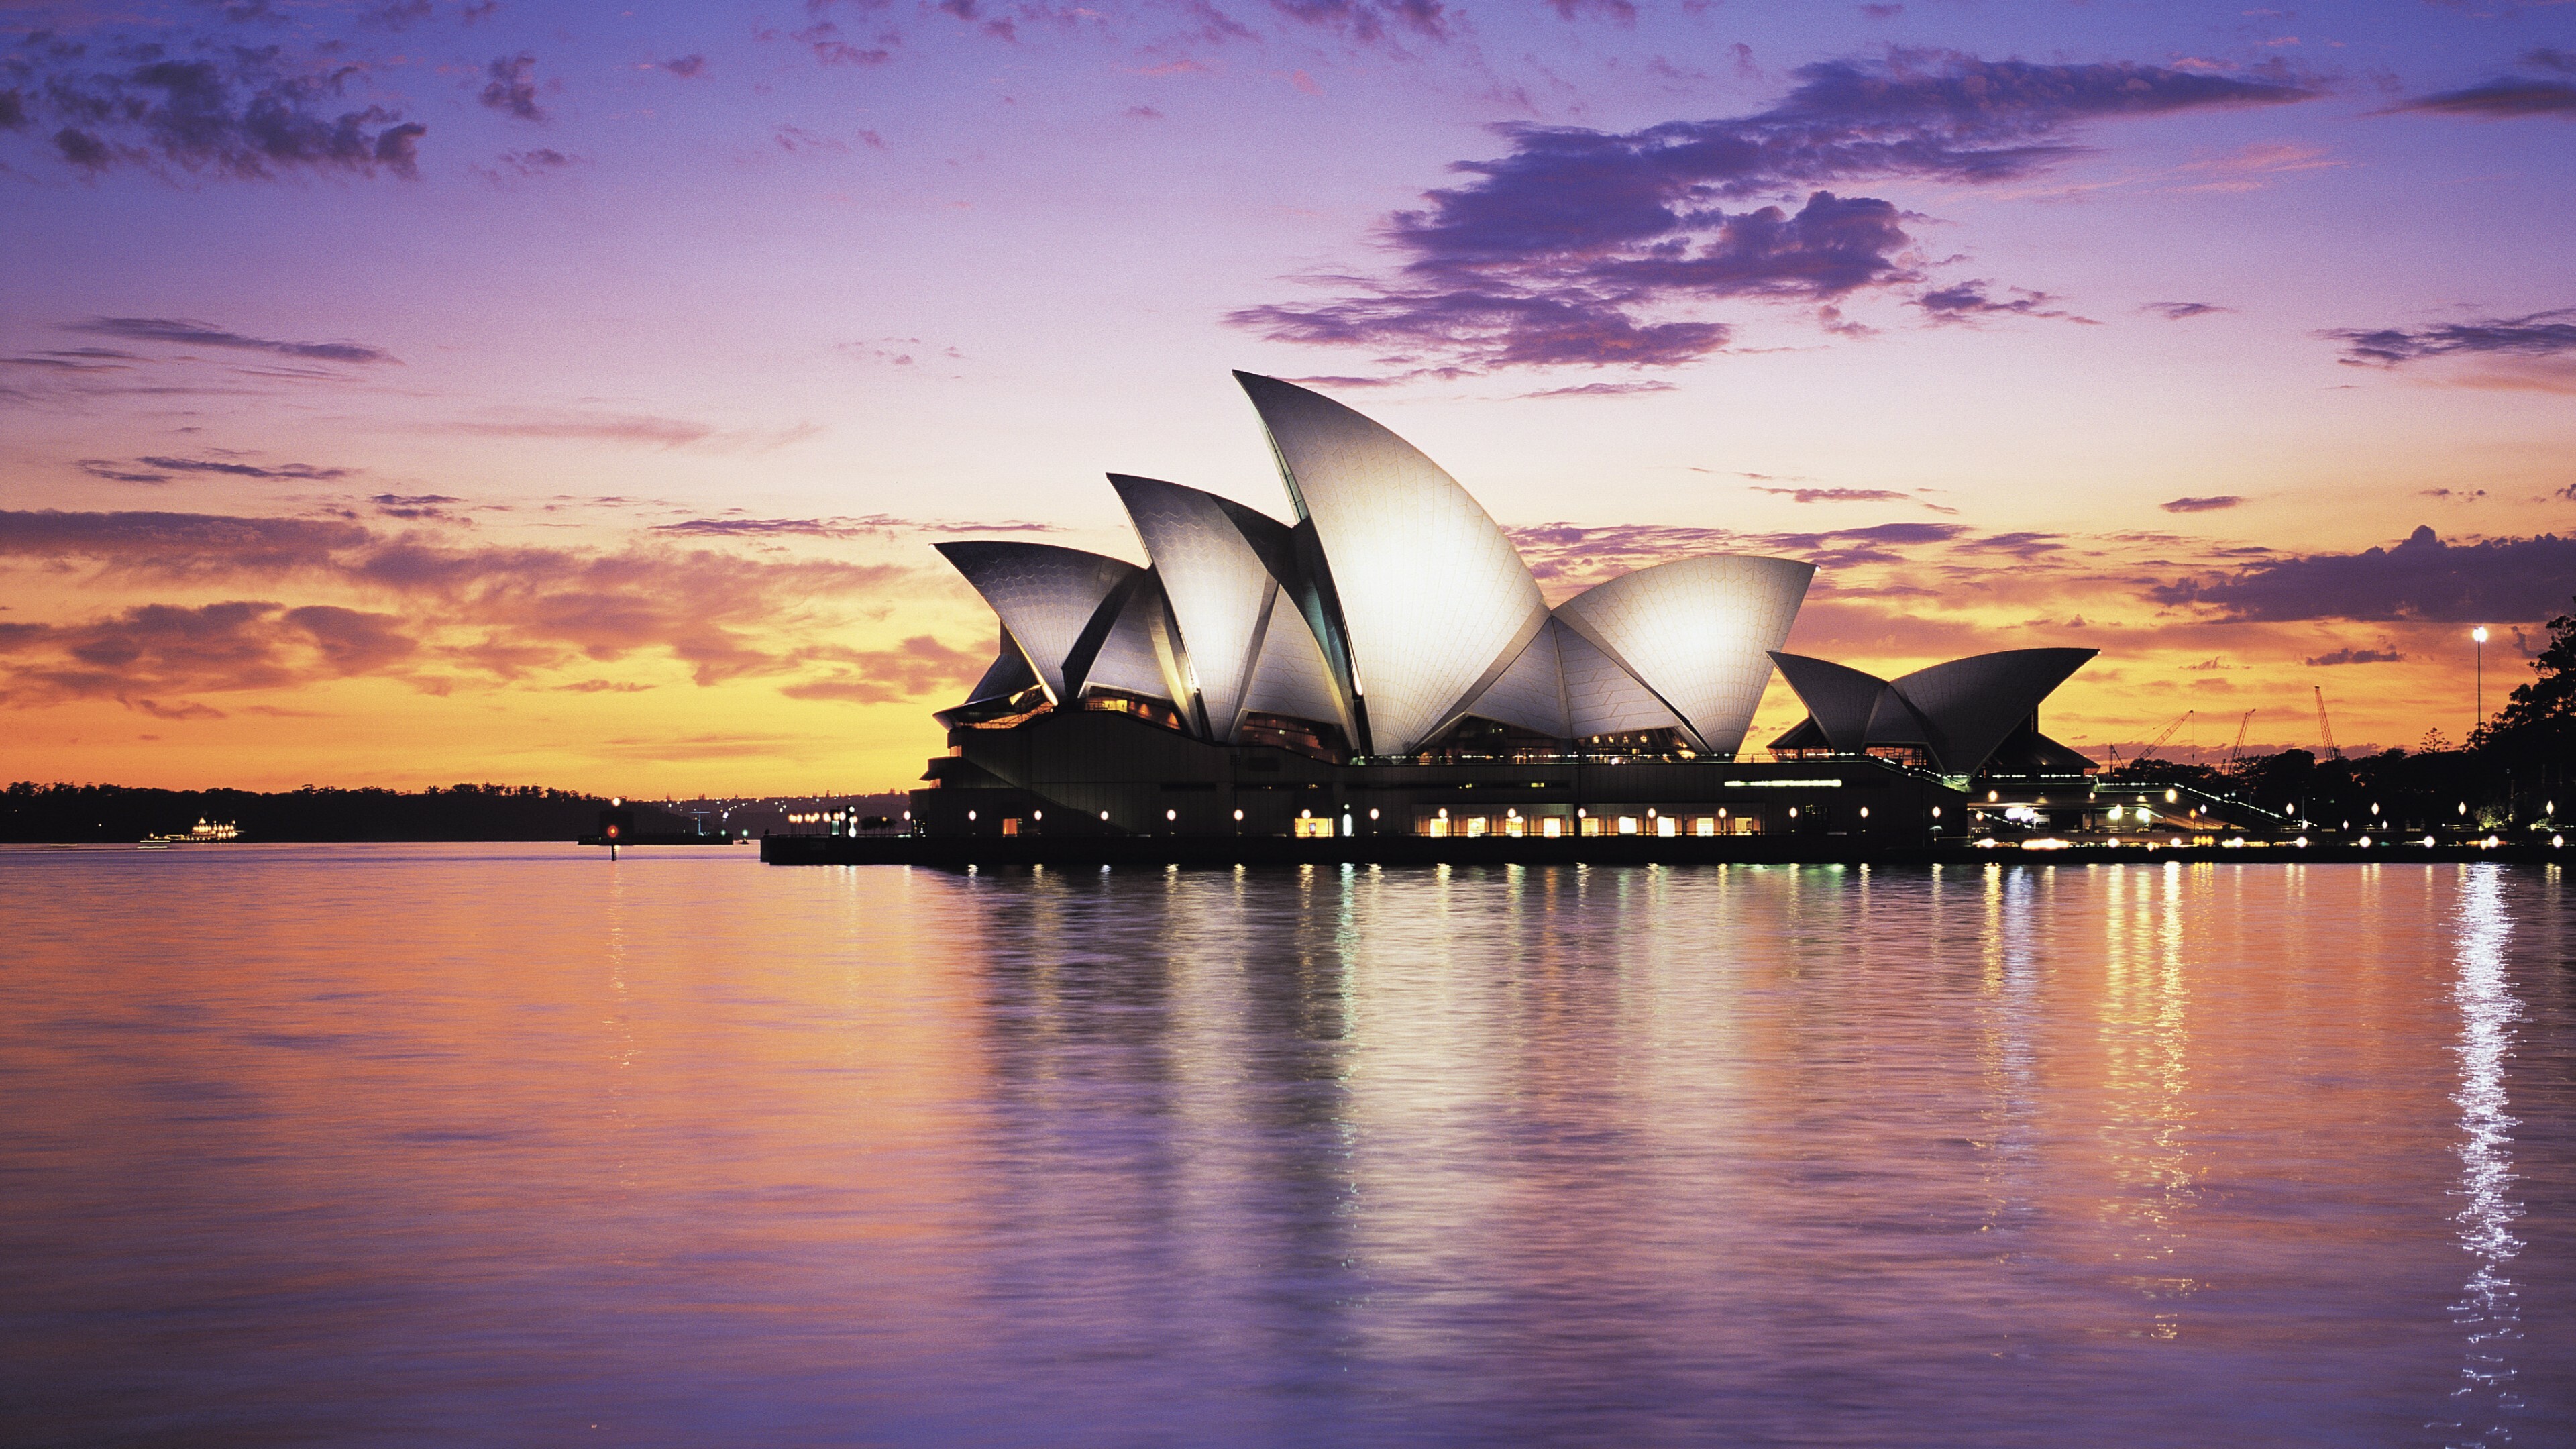 Australia: Sydney Opera House, A multi-venue performing arts center in Sydney. 3840x2160 4K Wallpaper.